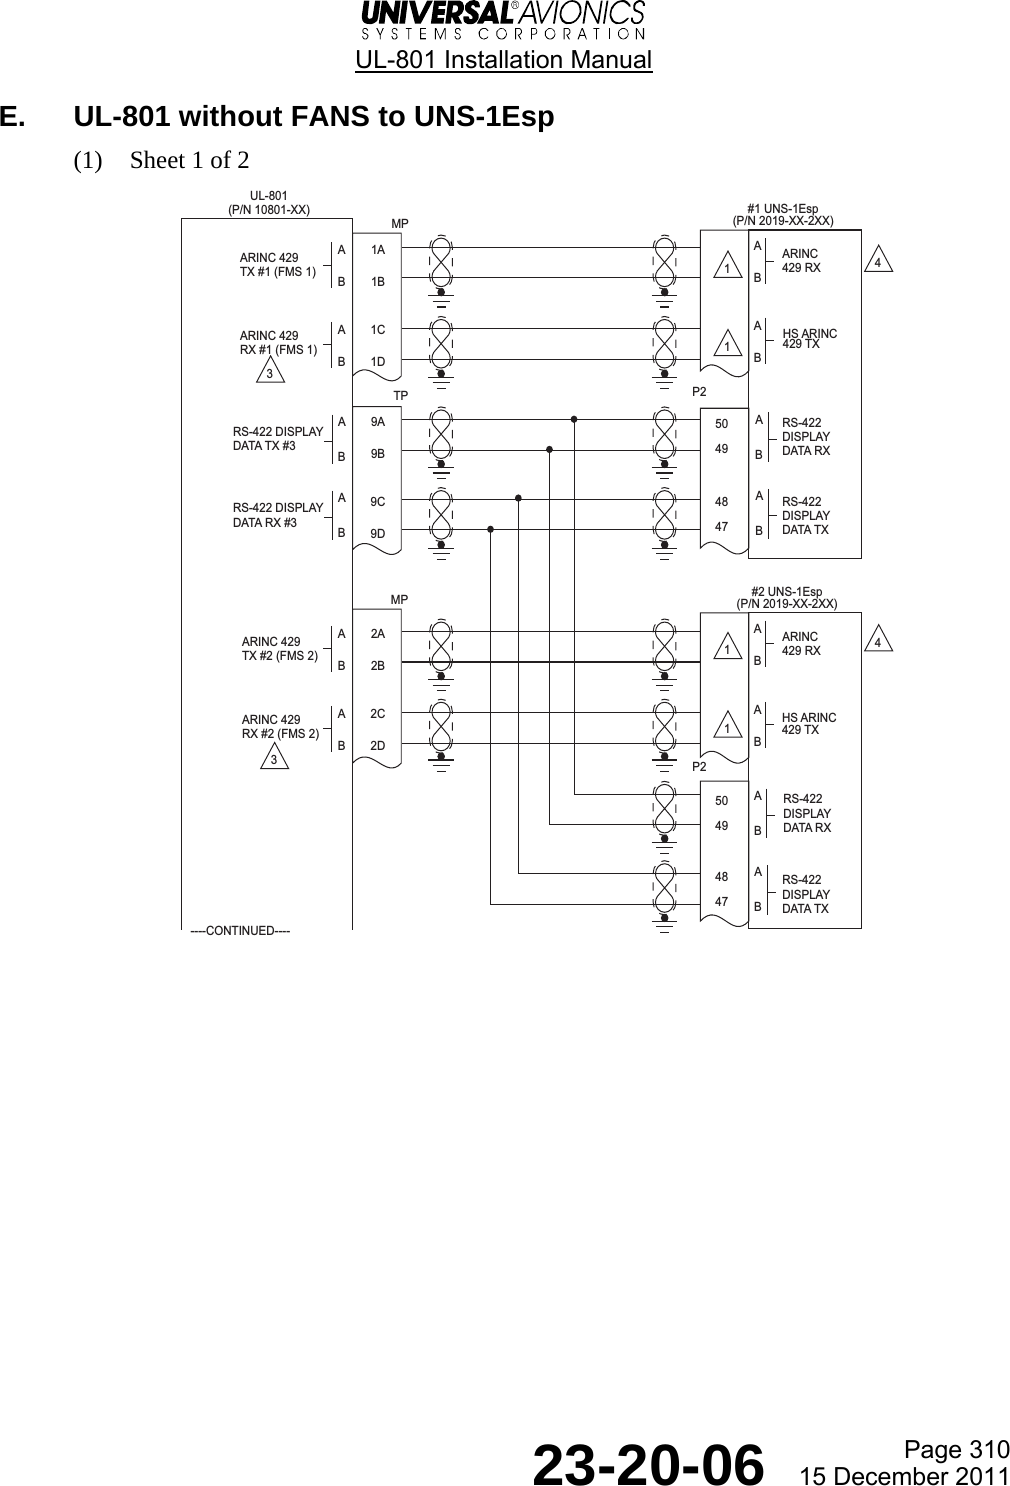  UL-801 Installation Manual  Page 310  23-20-06  15 December 2011 E.  UL-801 without FANS to UNS-1Esp (1) Sheet 1 of 2   UL-801(P/N 10801-XX)A1AB1BARINC 429TX #1 (FMS 1)#1 UNS-1Esp(P/N 2019-XX-2XX)ABARINC429 RXA1CB1DARINC 429RX #1 (FMS 1)ABHS ARINC429 TXABARINC429 RXA2CB2DARINC 429RX #2 (FMS 2)ABHS ARINC429 TXMP----CONTINUED----A2AB2BARINC 429TX #2 (FMS 2)RS-422 DISPLAYDATA TX #3RS-422 DISPLAYDATA RX #39A9BRS-422DISPLAYDATA RX9C9DRS-422DISPLAYDATA TXRS-422DISPLAYDATA RXRS-422DISPLAYDATA TXMPTP50494847P233441111#2 UNS-1Esp(P/N 2019-XX-2XX)50494847P2ABABABABABAB